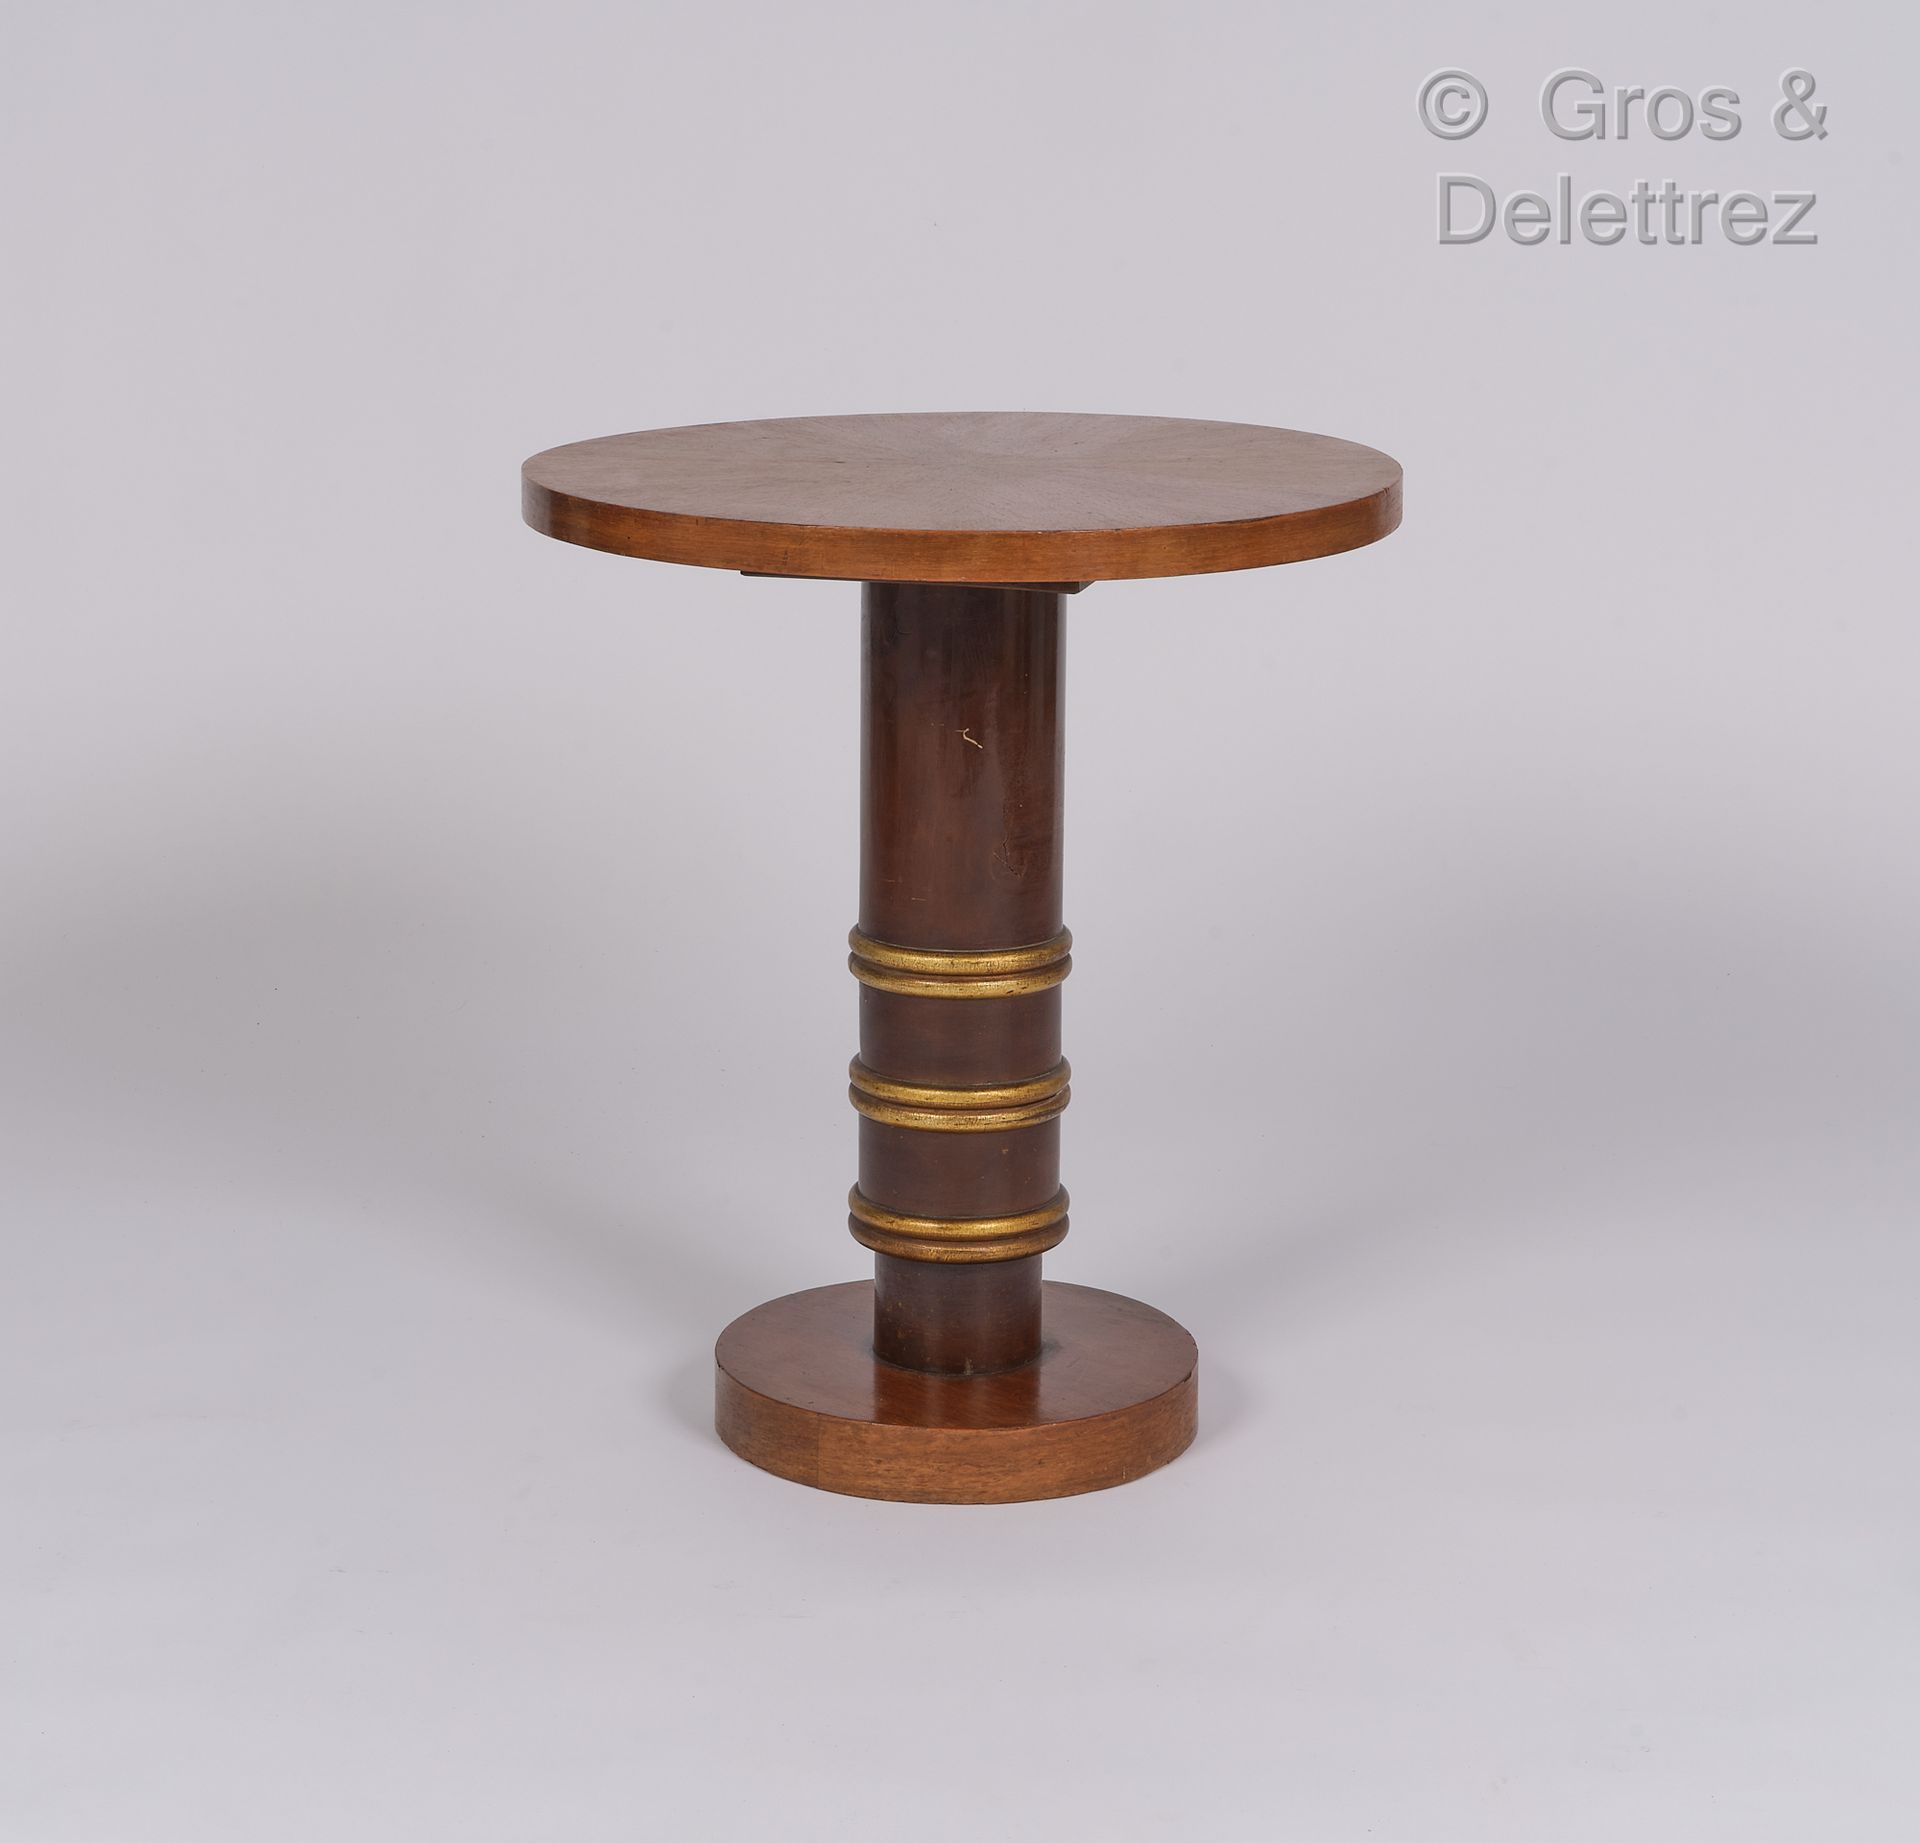 Null 40年代的作品

单板基座桌，圆形桌面，底部有镀金圆环

高：57厘米，深：49.5厘米